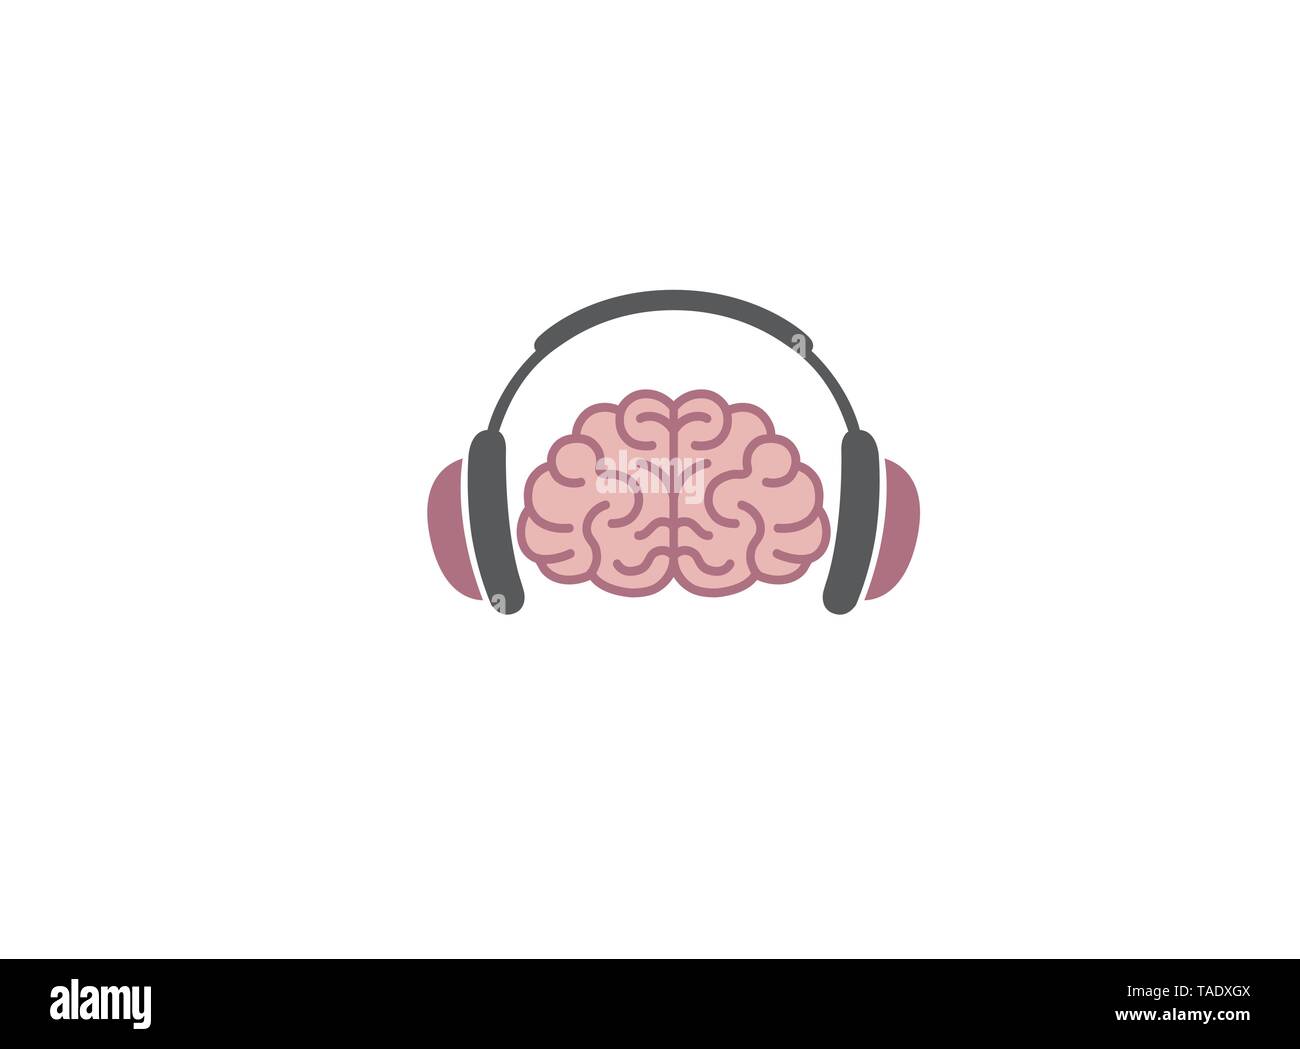 Creative Abstract Headphone Brain Logo Vector Design Illustration Stock Vector